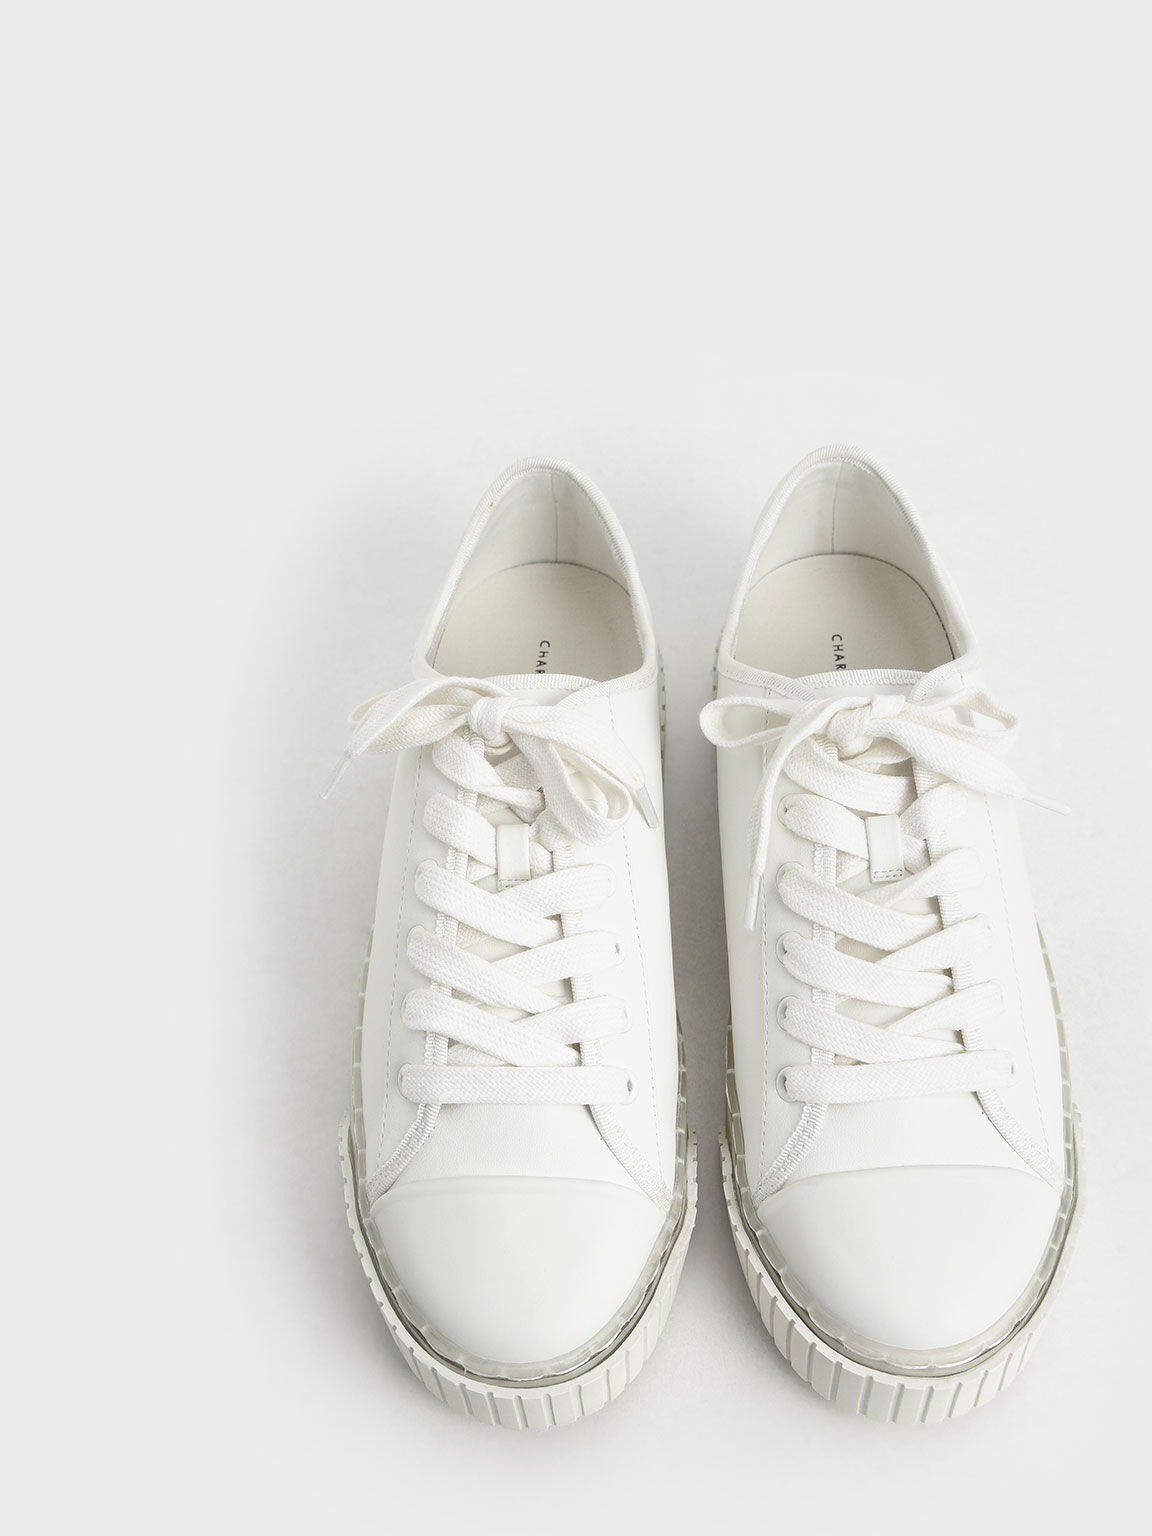 Platform Sneakers, White, hi-res